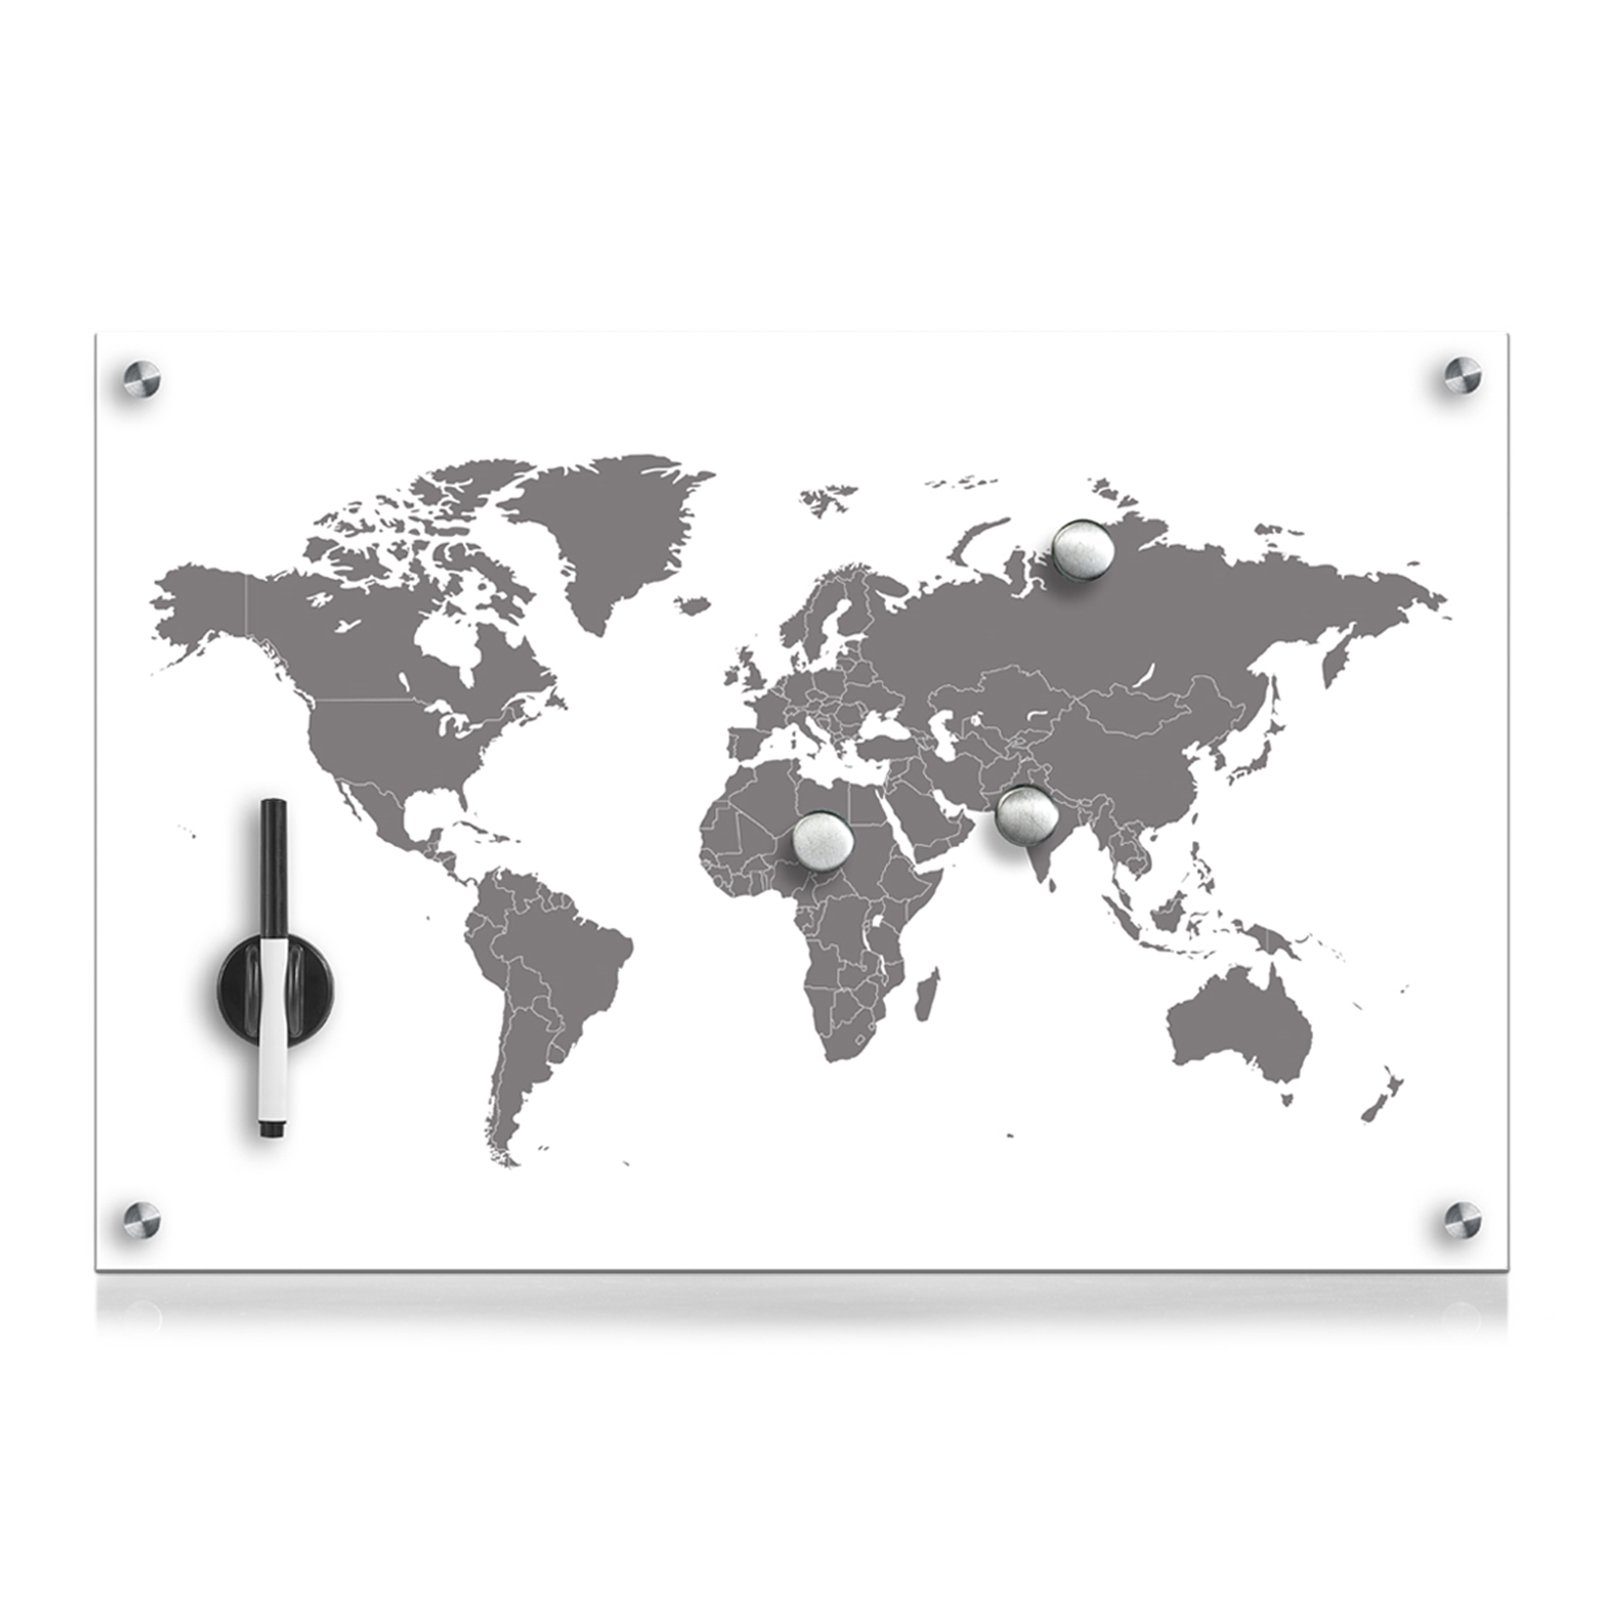 HTI-Living Memoboard Memoboard Worldmap, Glas Magnettafel Schreibboard rechteckig Magnetboard Schreibtafel